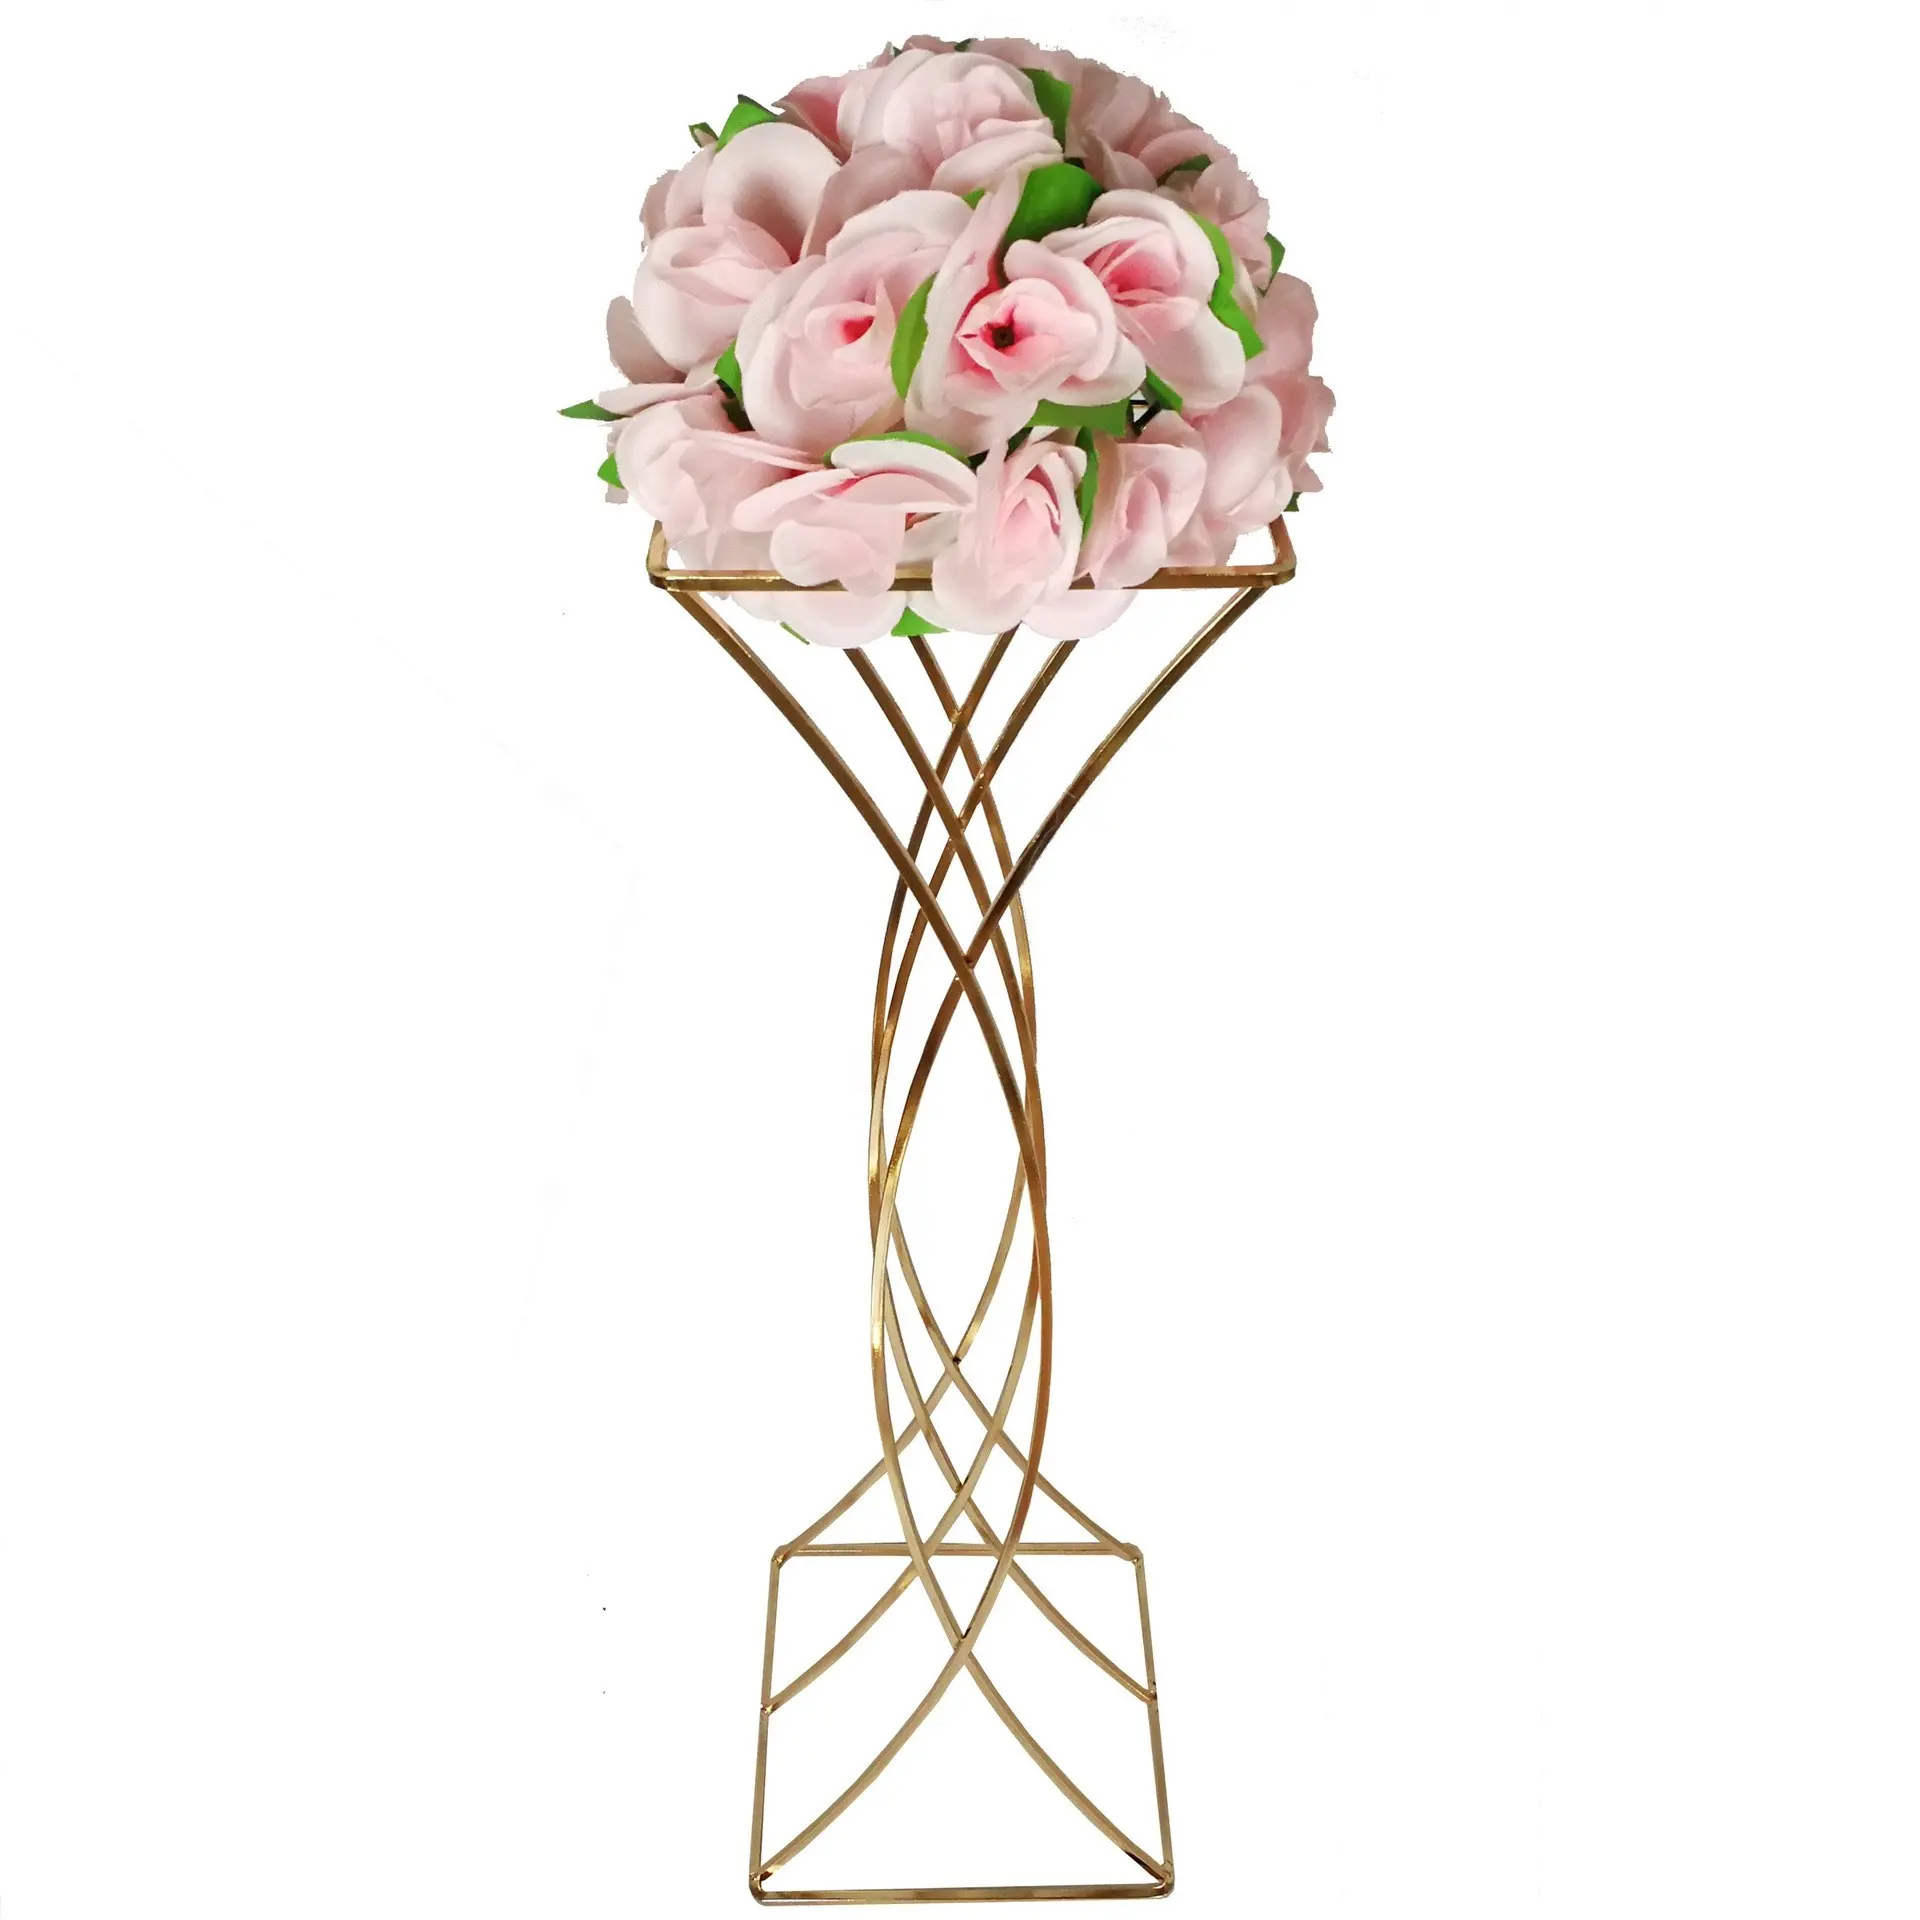 Golden Metal Flower Stand High Tall Wedding Rectangle Floral Event Table Centerpiece